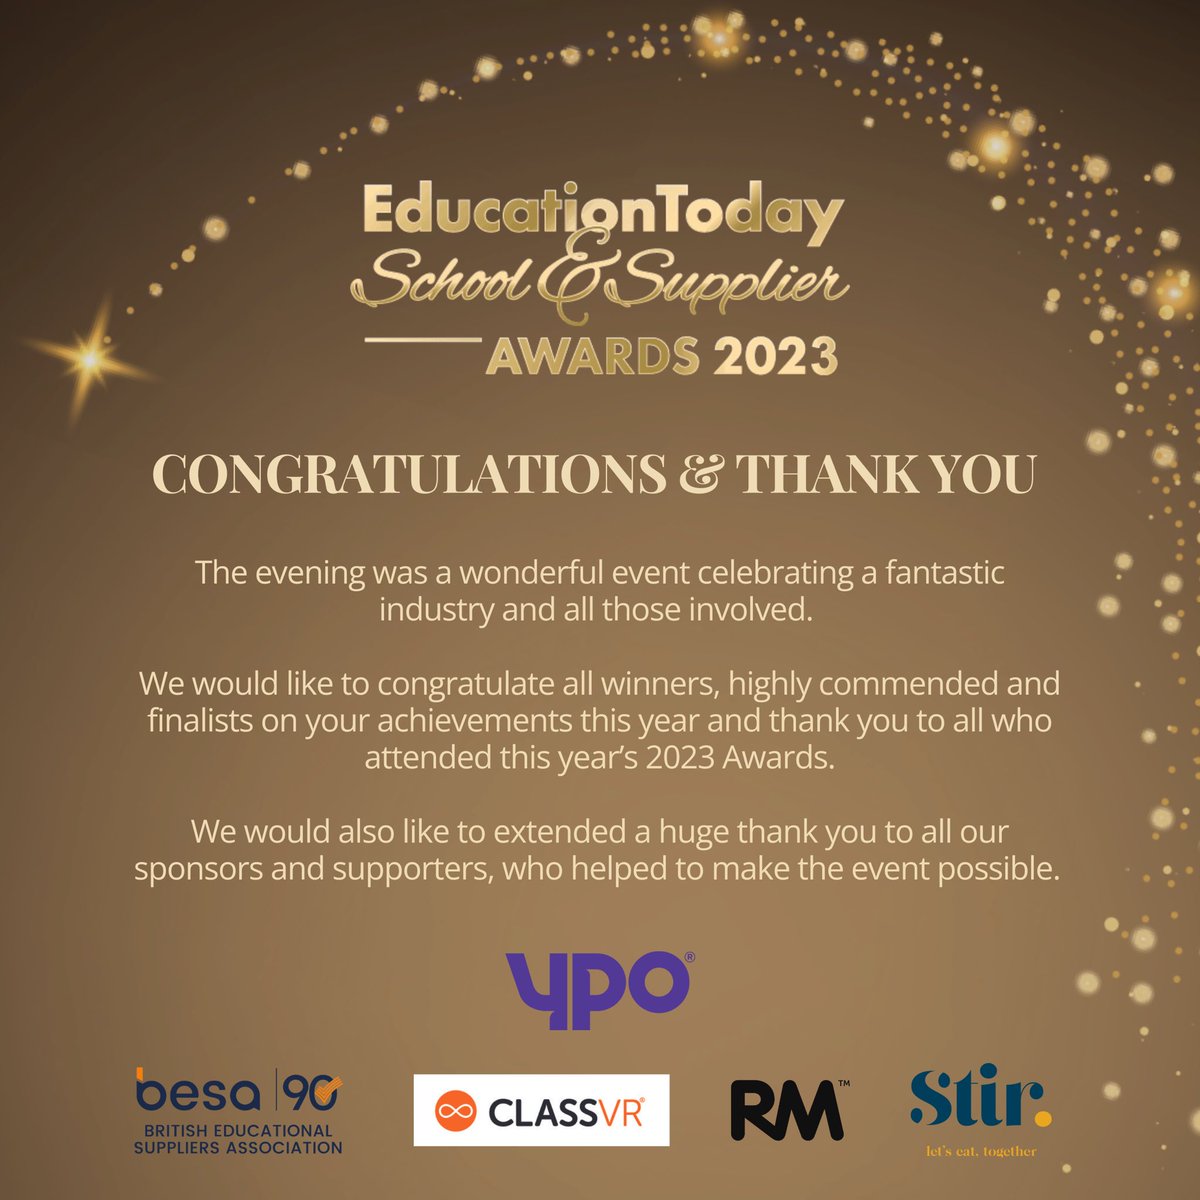 Congratulations & thank you! #EducationAwards2023